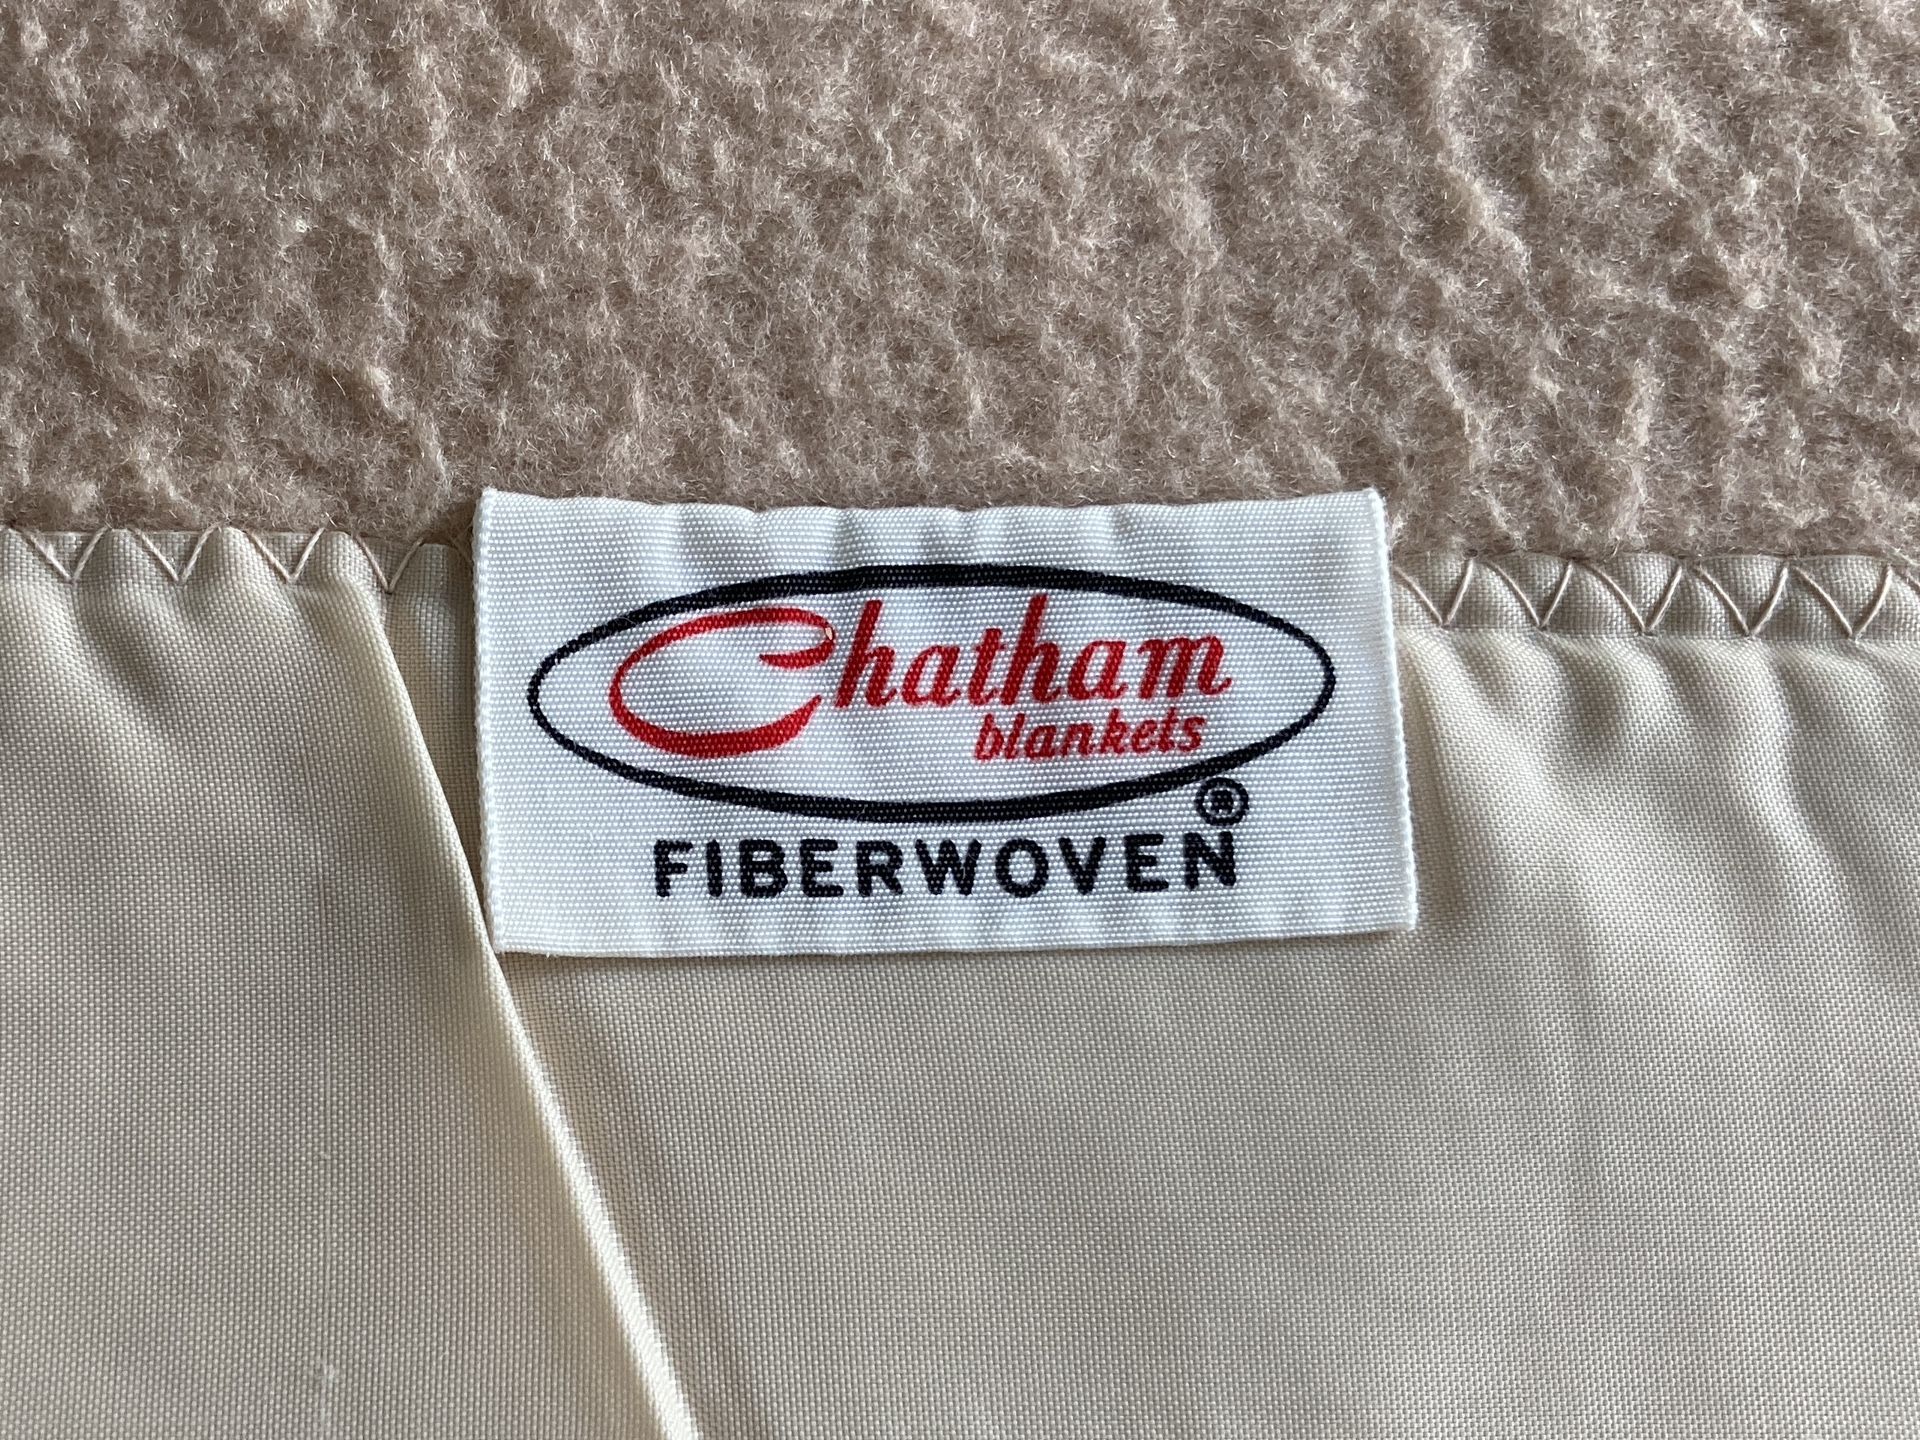 VTG Chatham Blanket Sand Color with Satin Trim, Twin Winter Blanket 87x70 Mint